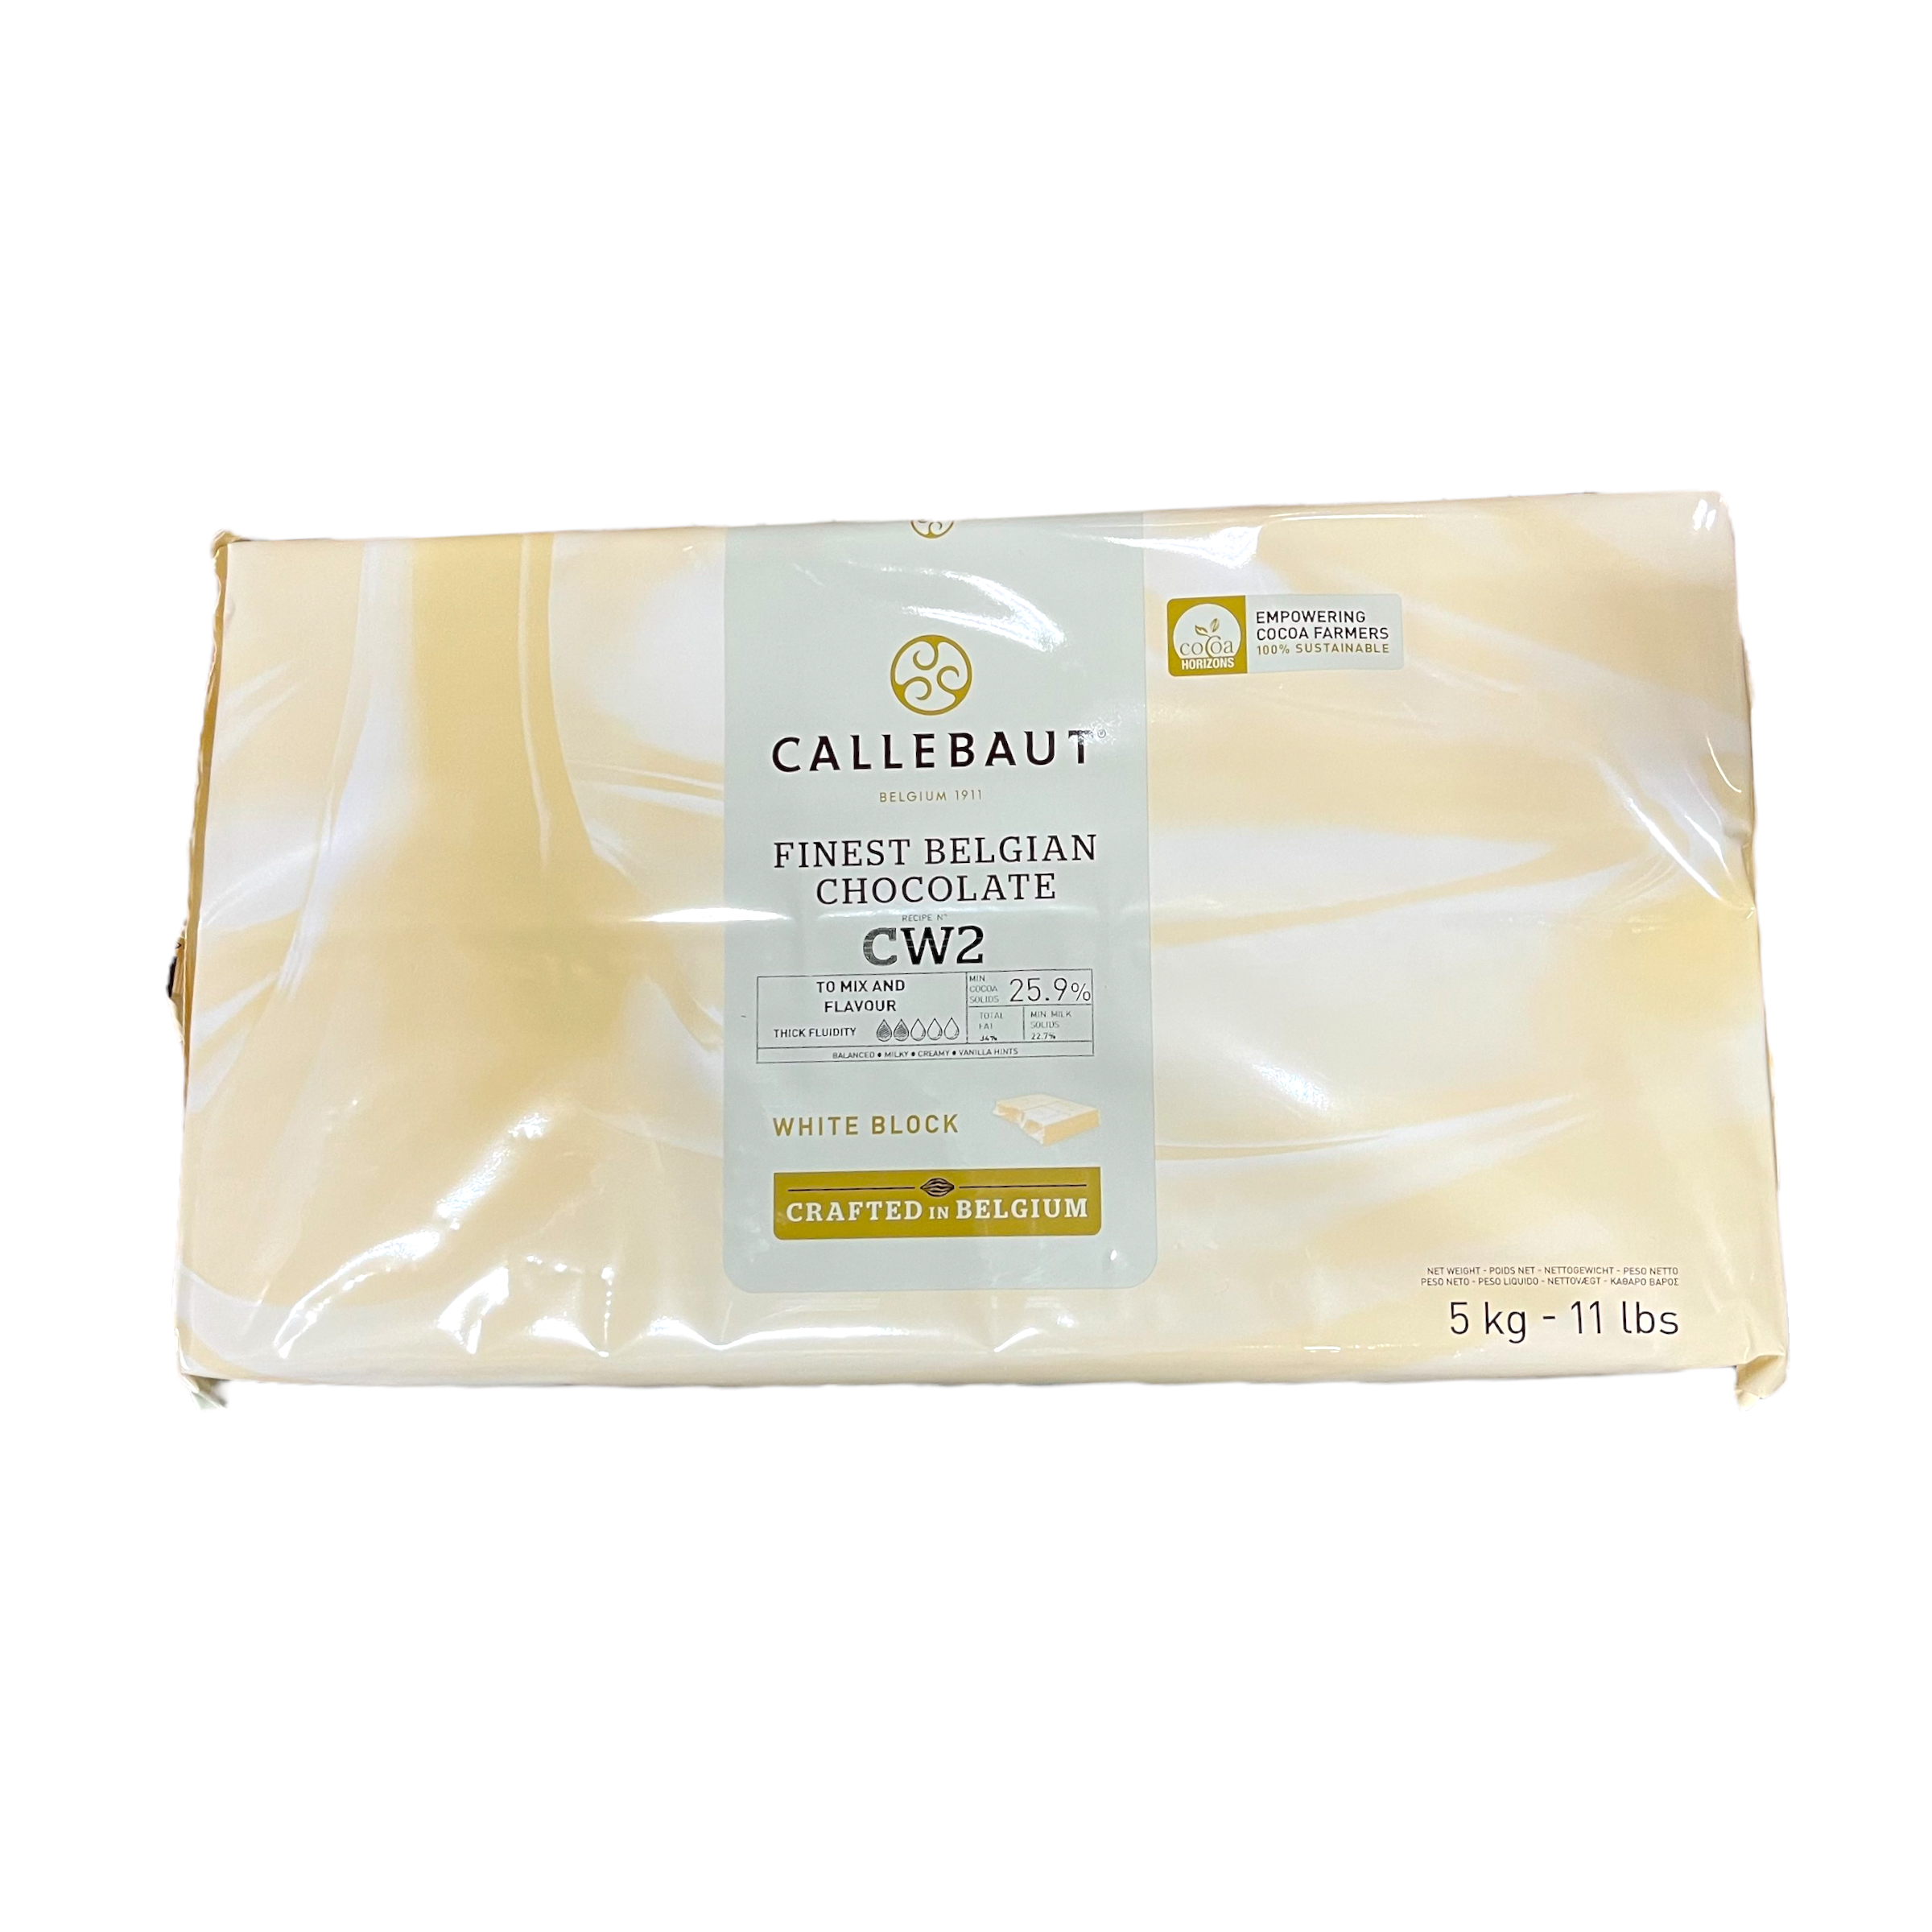 Barry Callebaut 25.9% White Chocolate Block 11lb